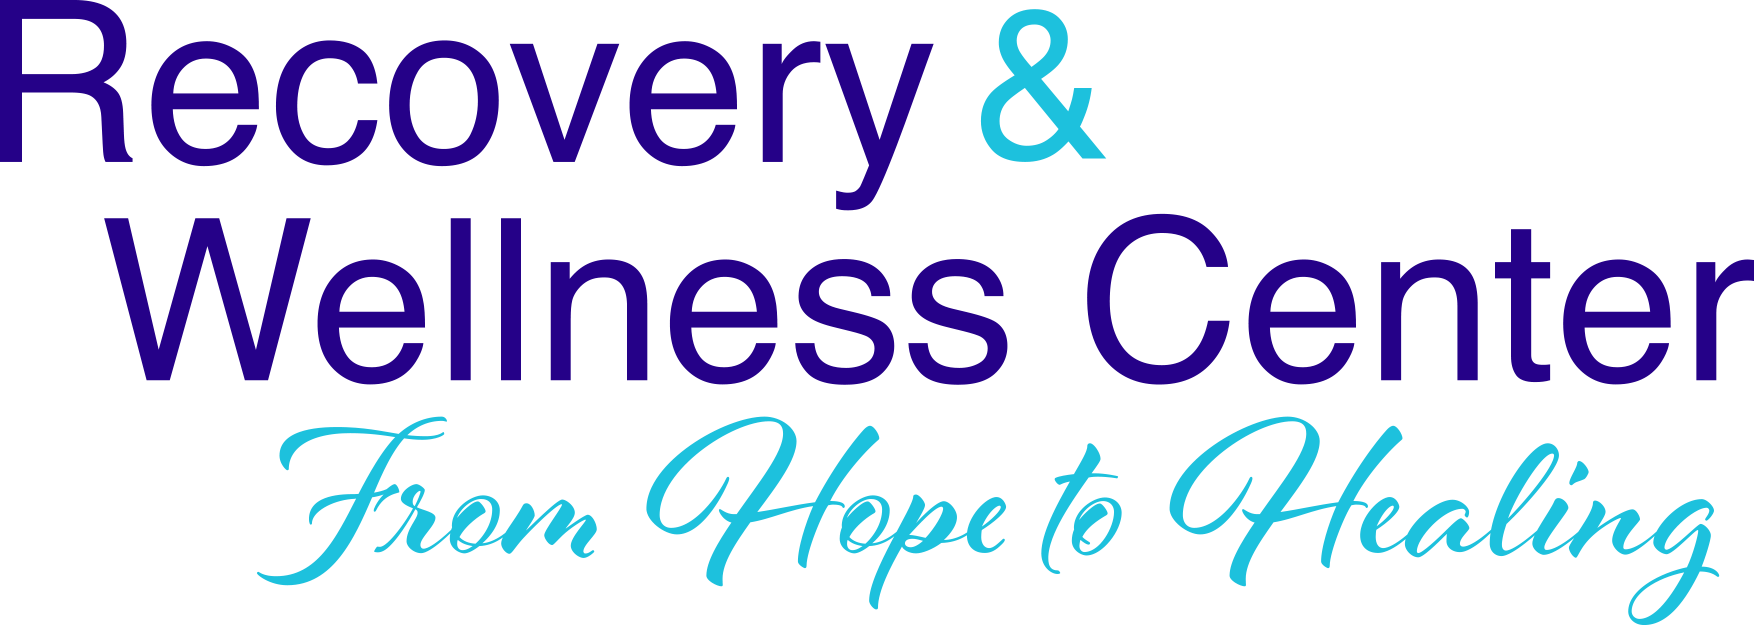 Recovery & Wellness Center logo